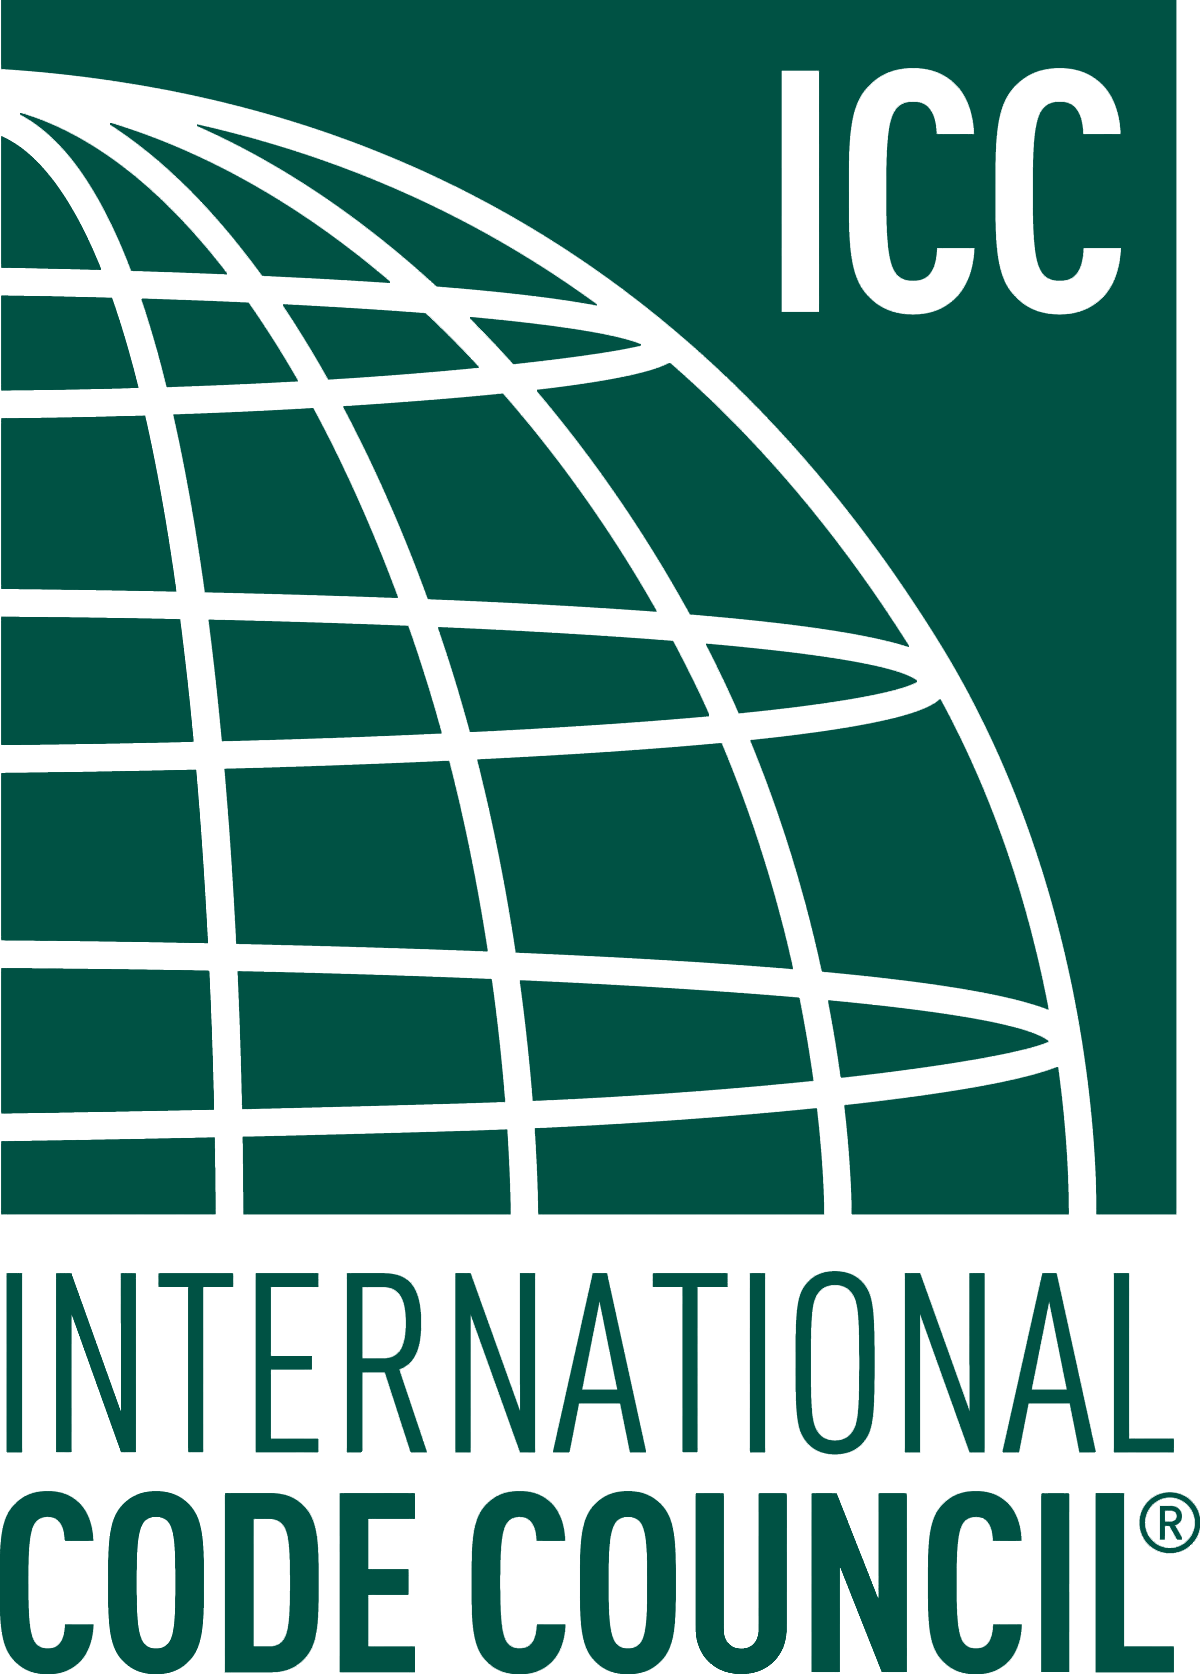 The International Building Code - ICC